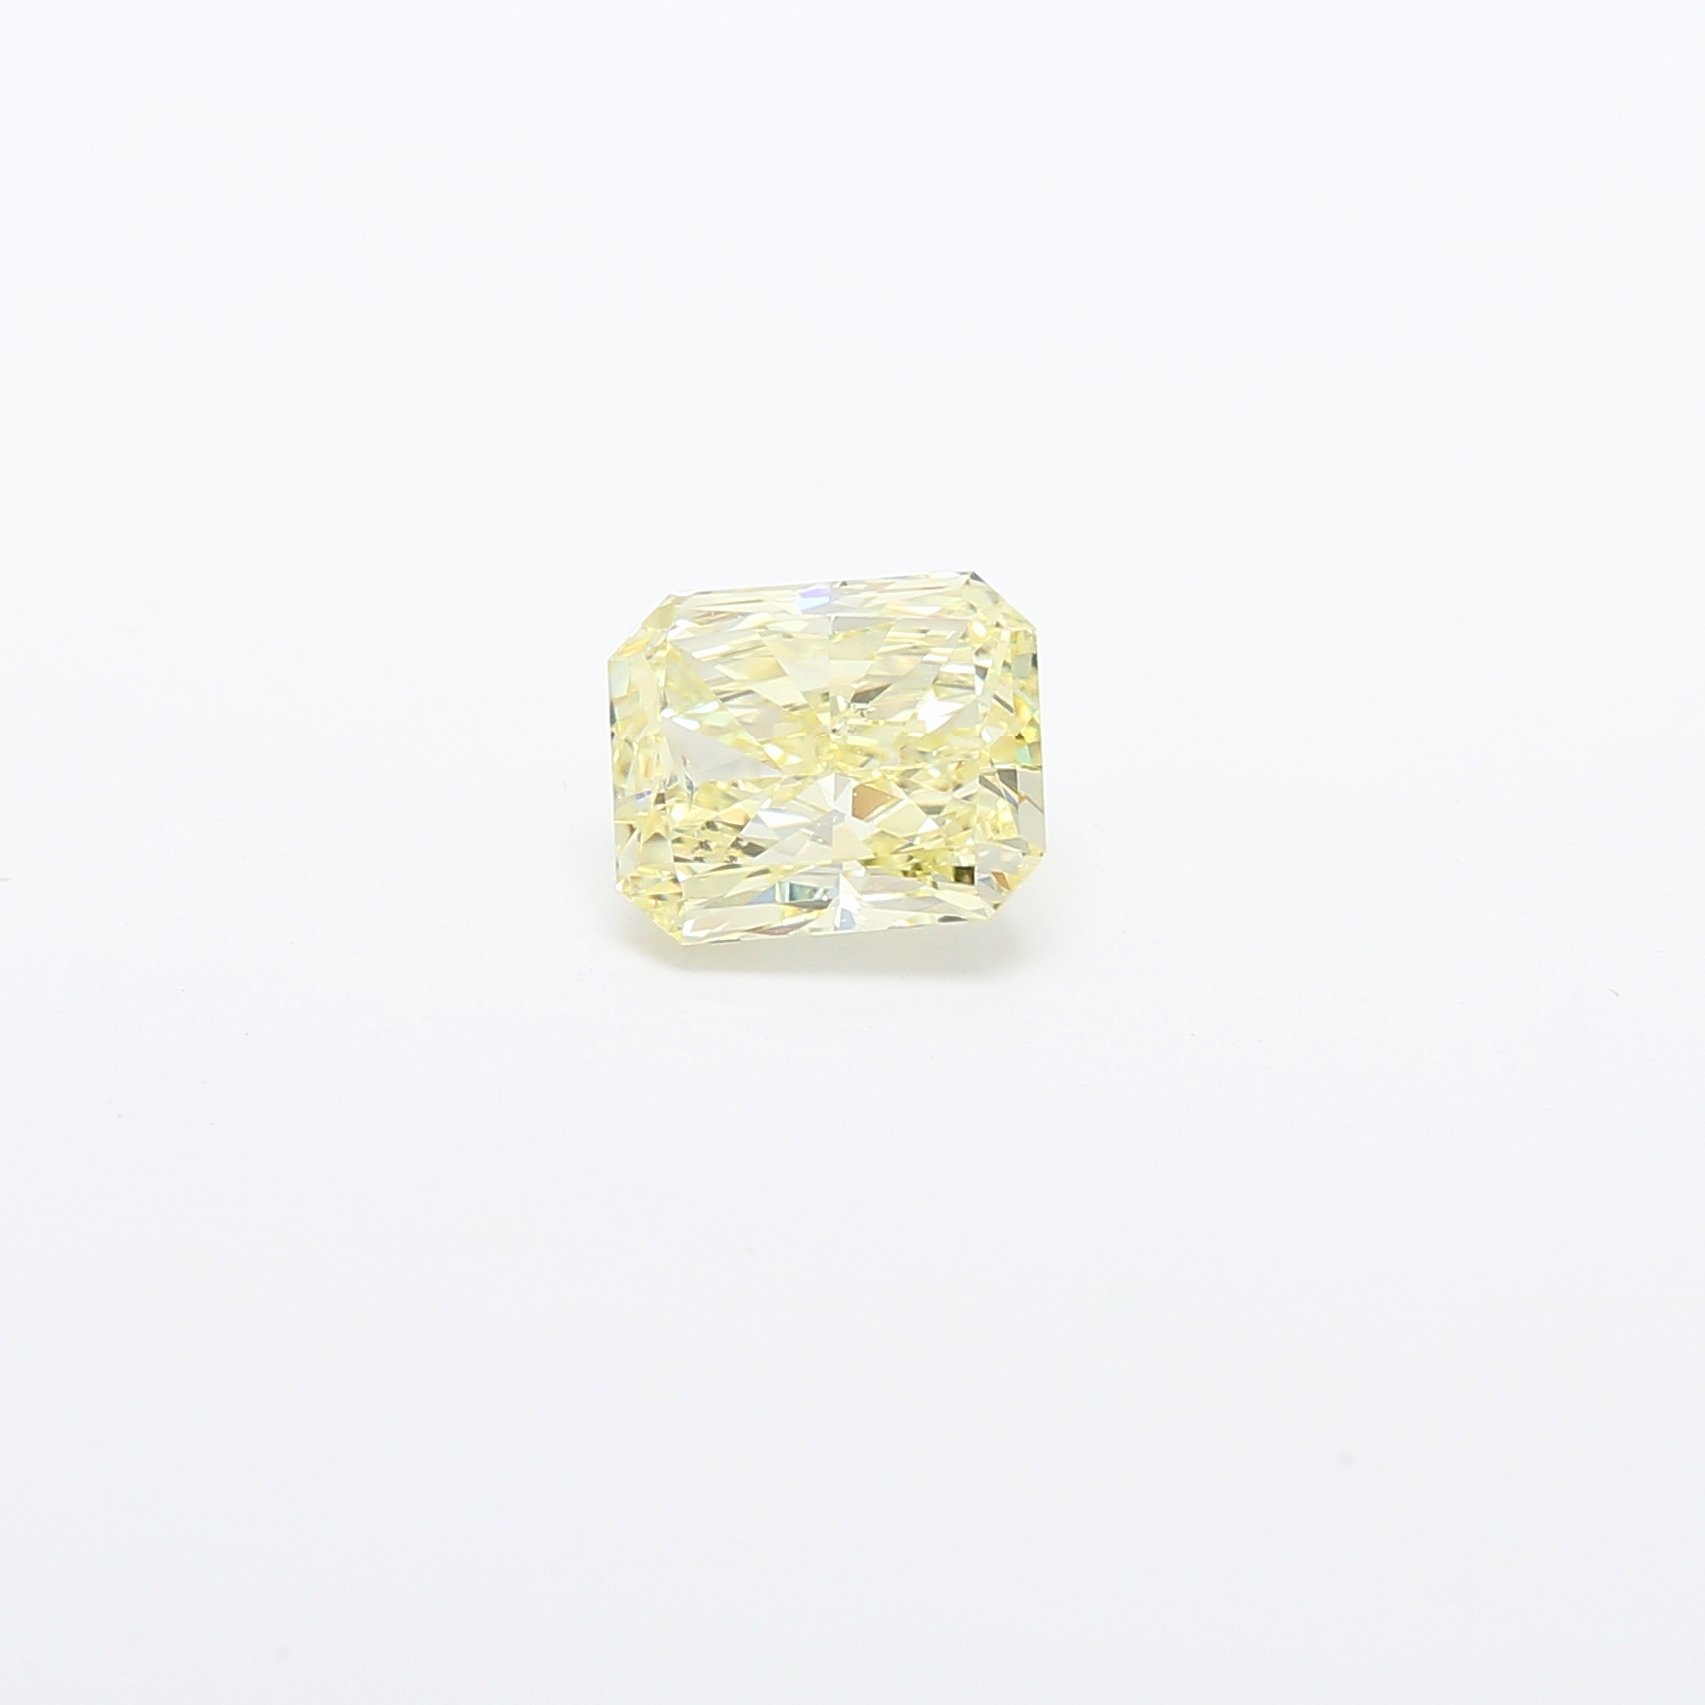 1.25ct Radiant Cut Diamond, SI1-FY -GIA